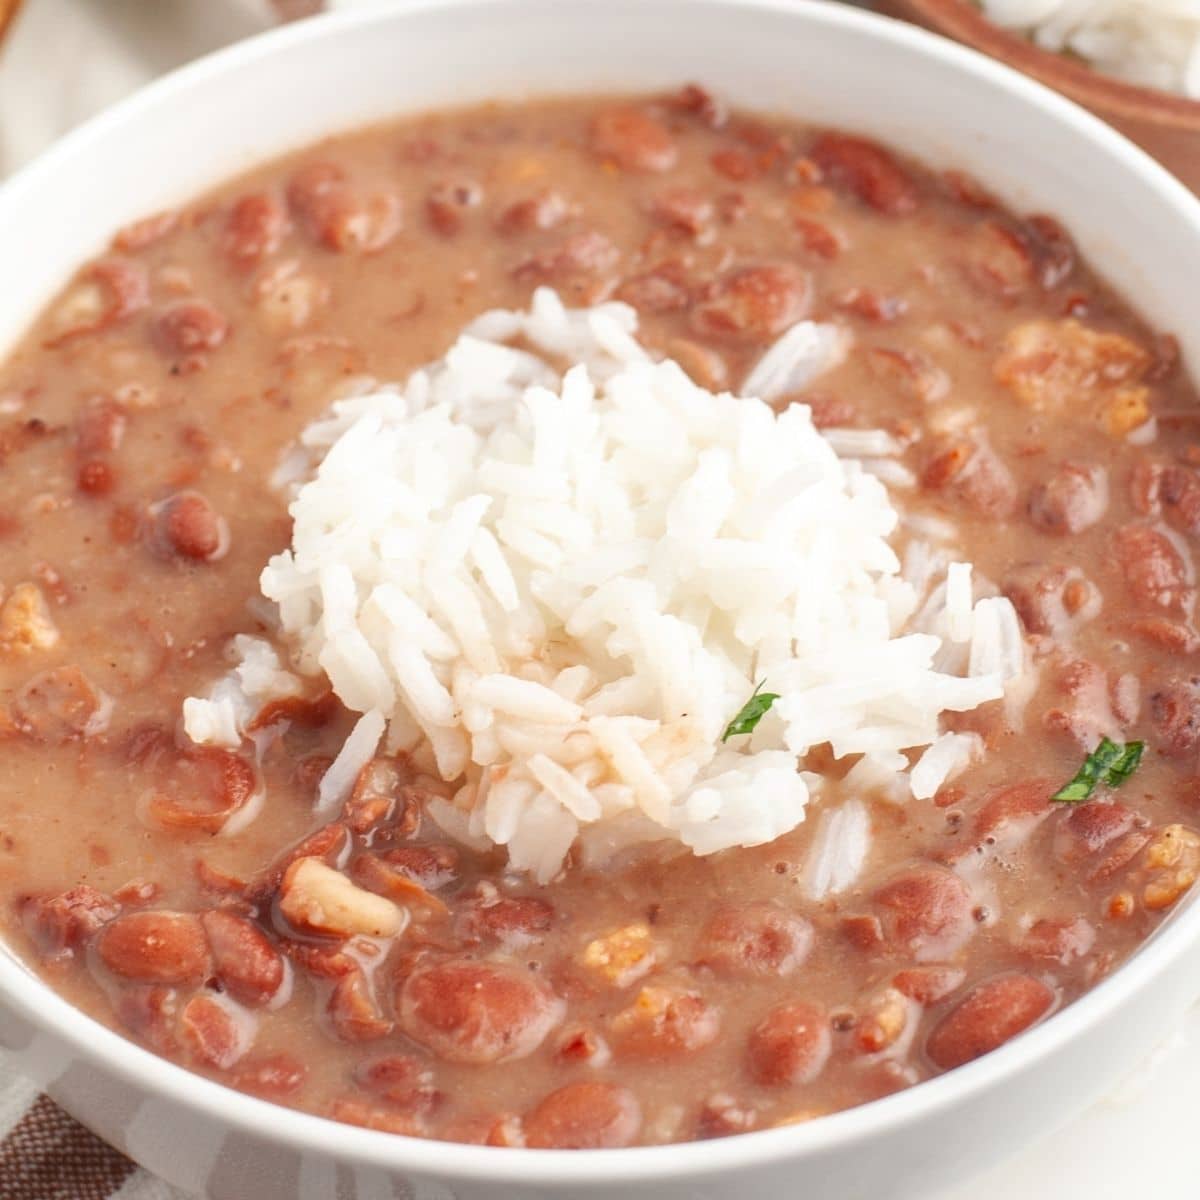 Catalog :: Pantry :: Rice, Grains & Dried Beans :: Zatarain's Red Beans & Rice  Rice Dinner Mix, 8 oz